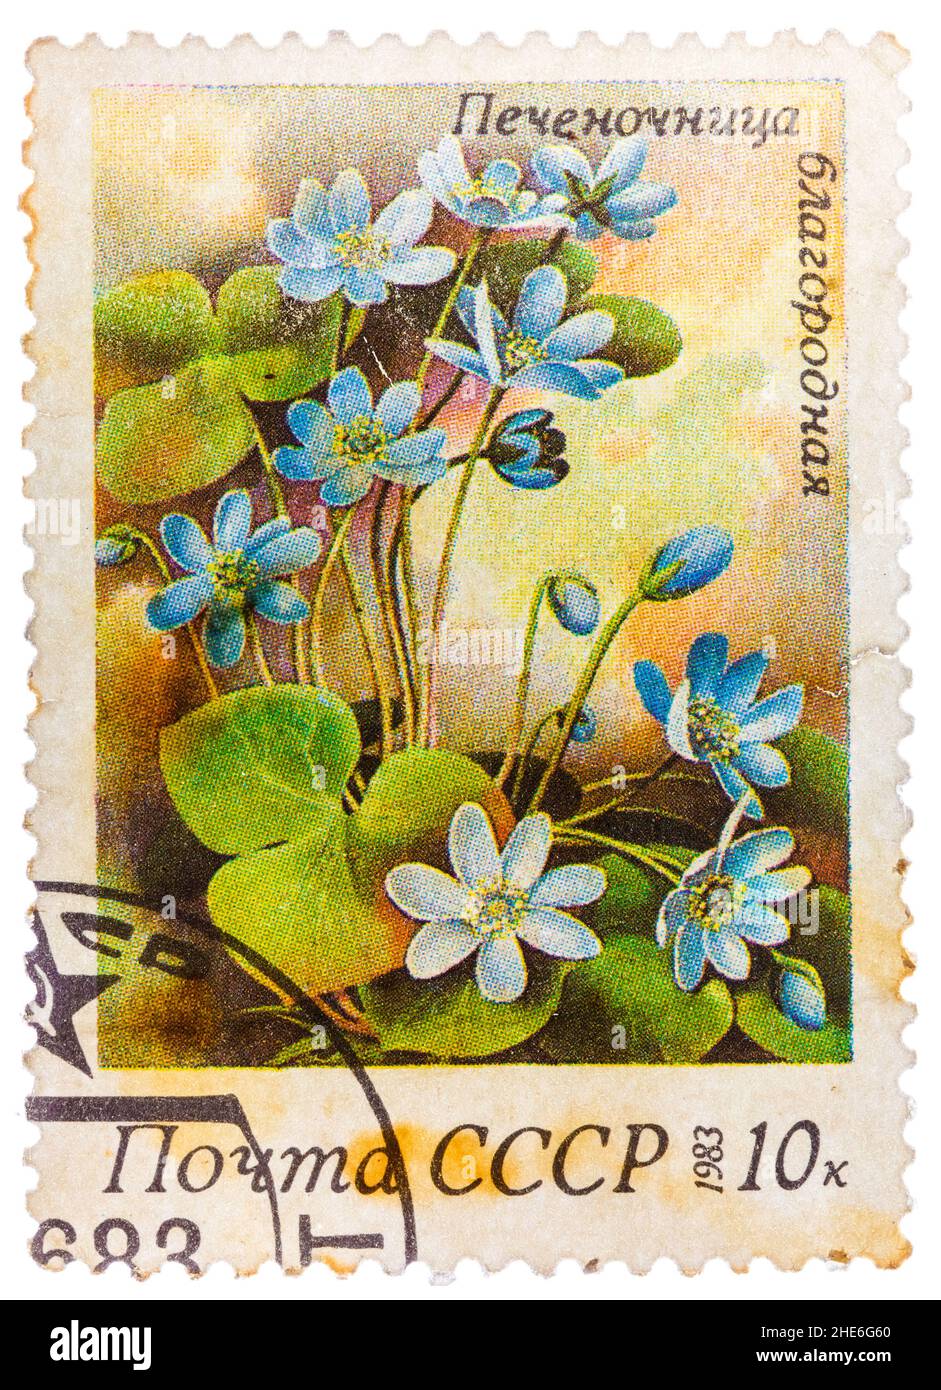 Stamp printed in USSR (CCCP, soviet union) shows anemone hepatica (liverwort, kidneywort or pennywort) Stock Photo